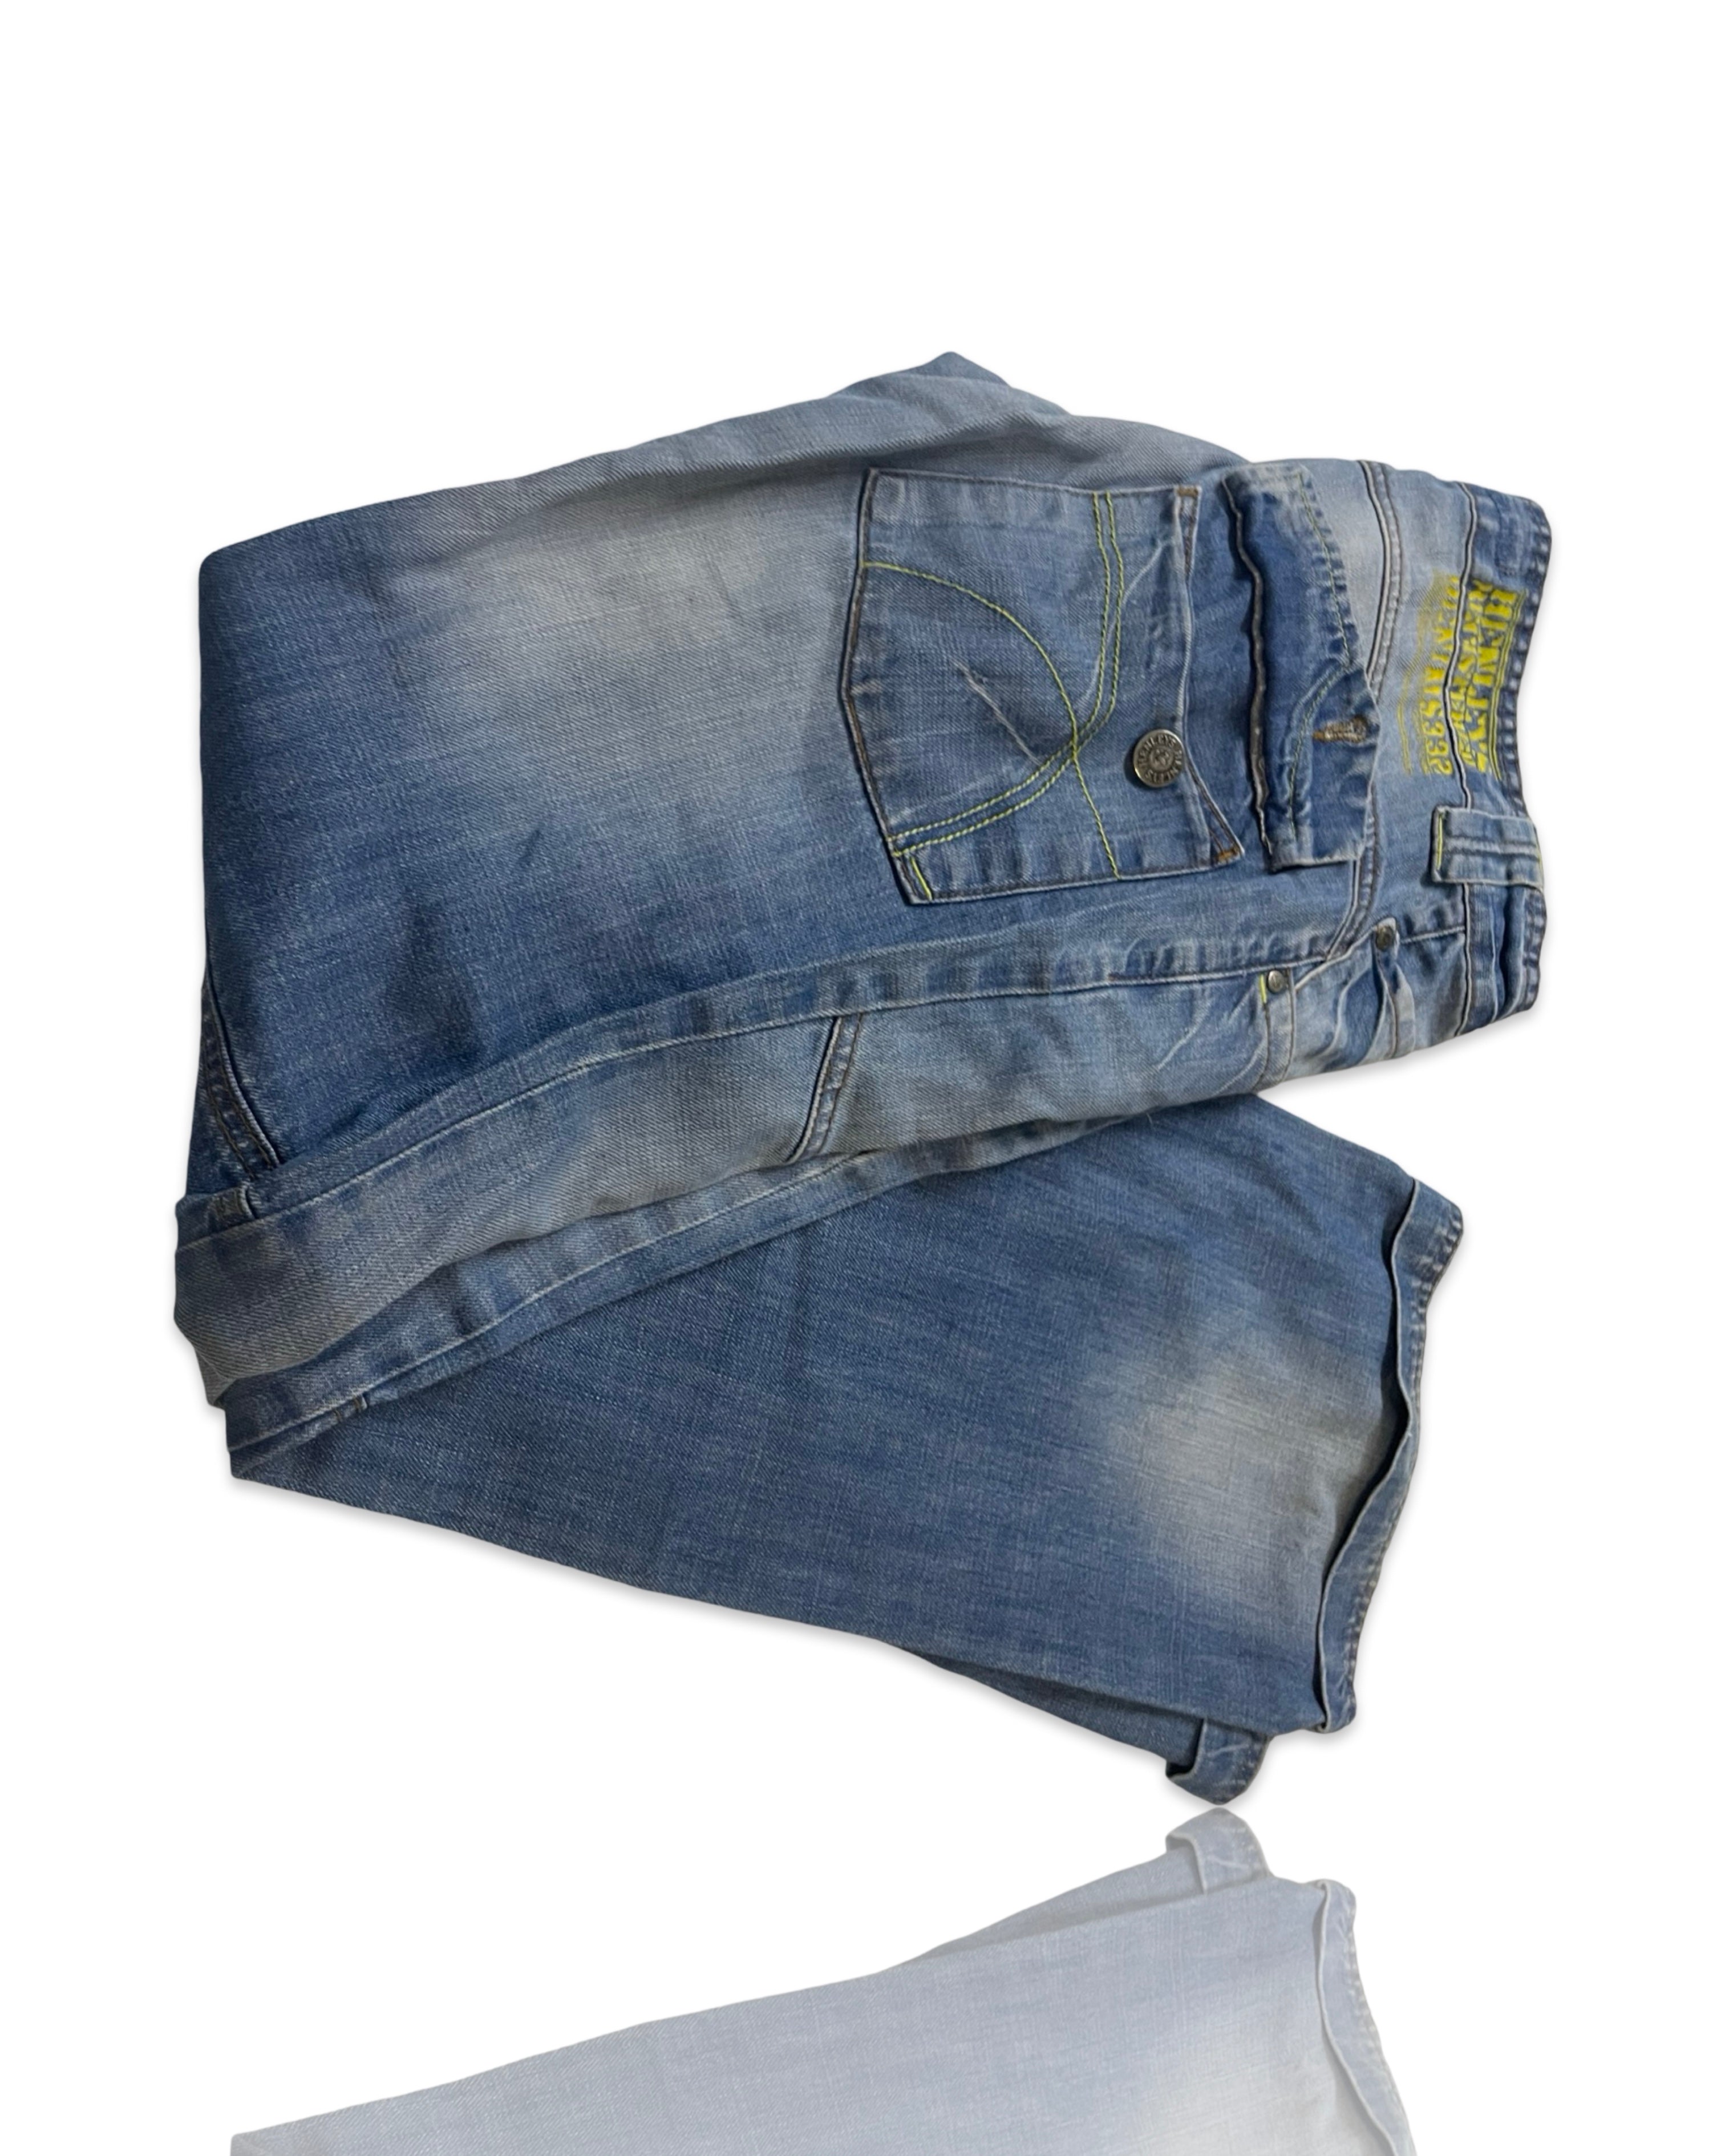 Henleys Jeans Adult 34x31 Medium Wash Straight Leg lap Pockets Baggy Mens Slight tear at the bottom|SKU 4250